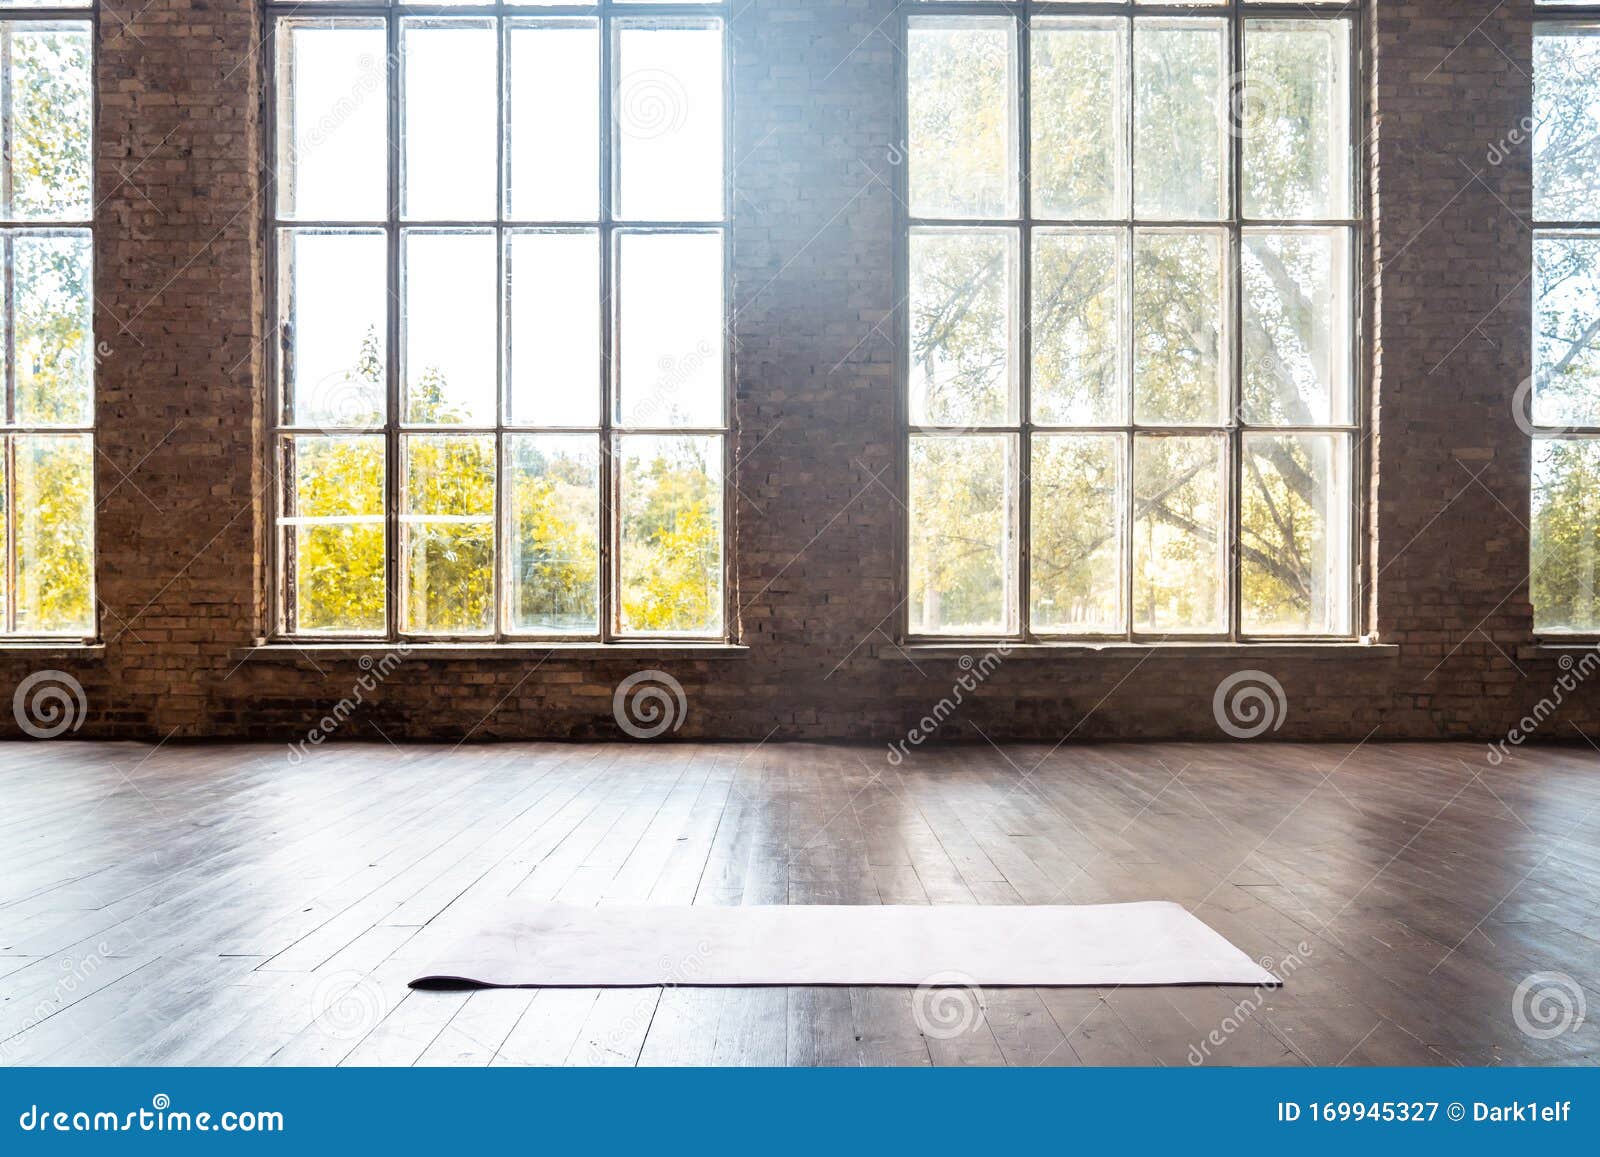 rolled yoga pilates rubber mat inside gym studio on wooden floor background